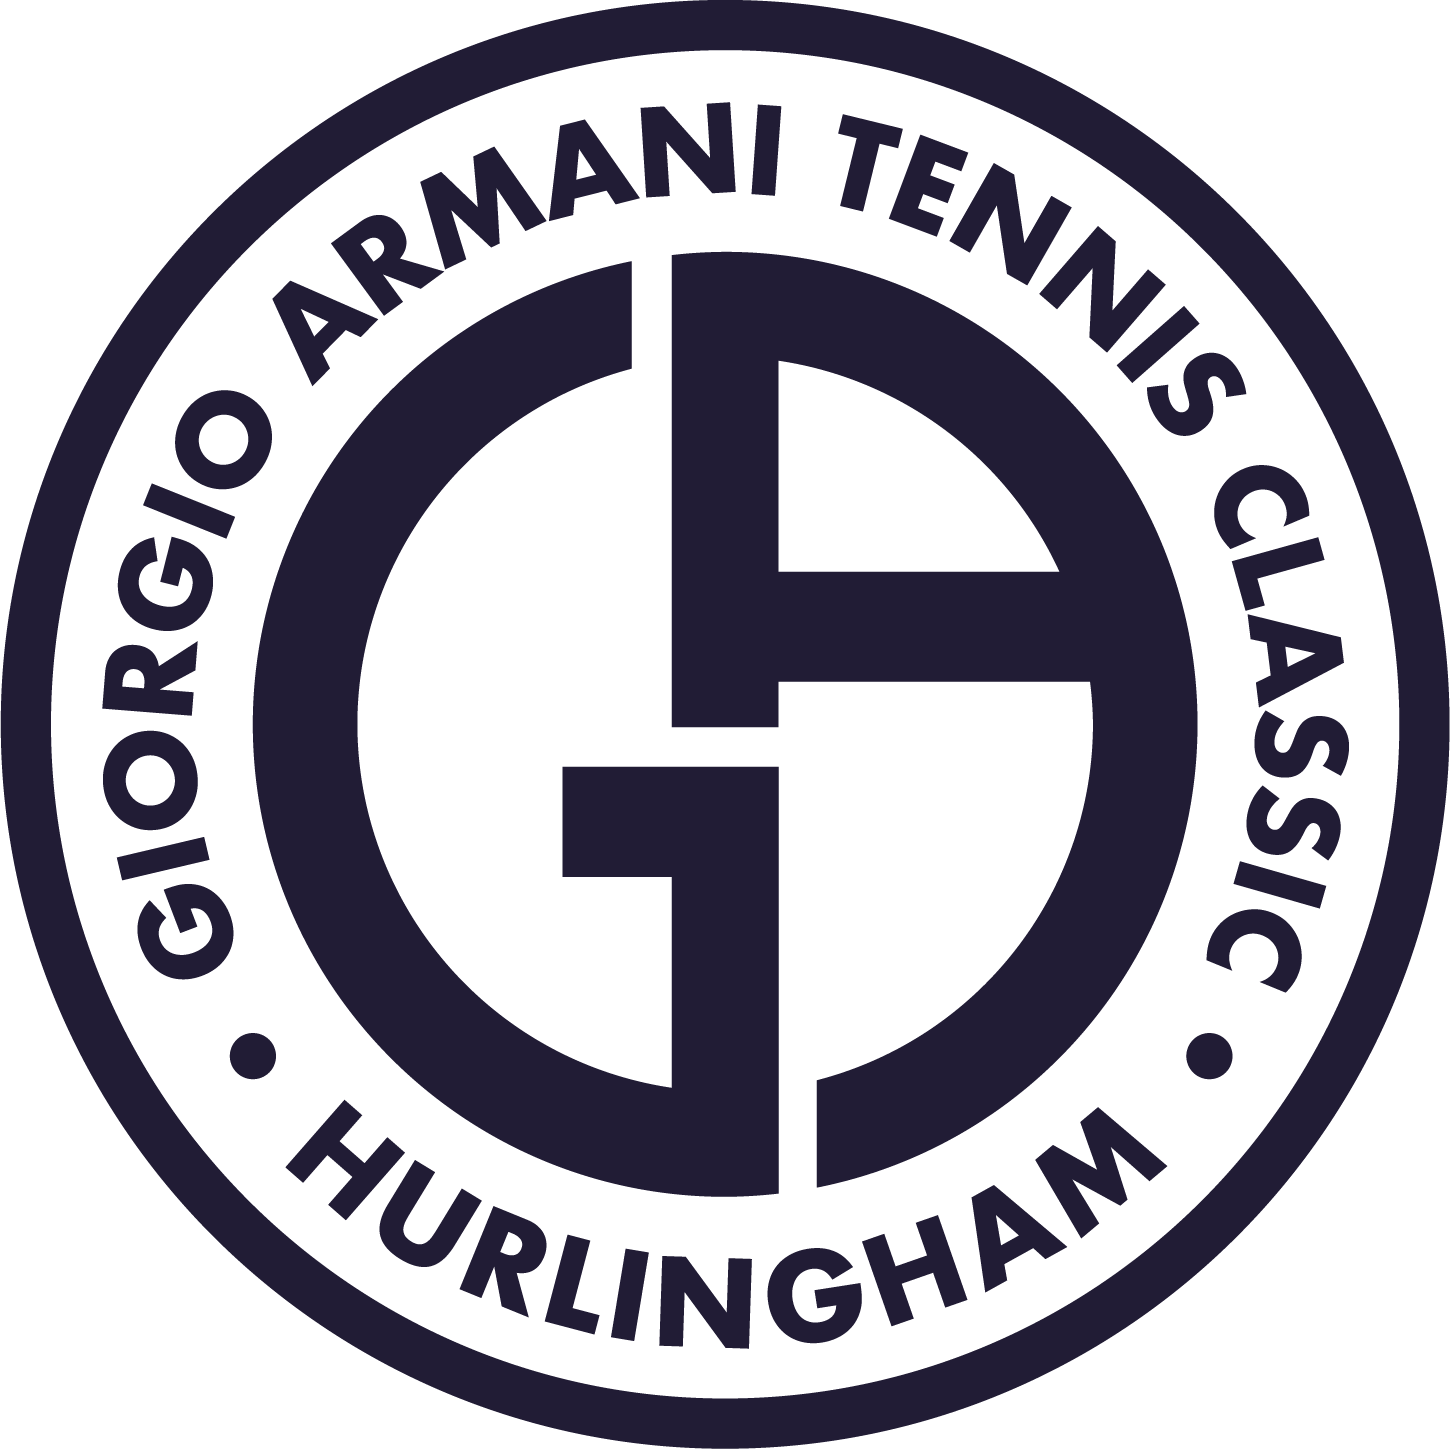 Giorgio Armani Tennis Classic